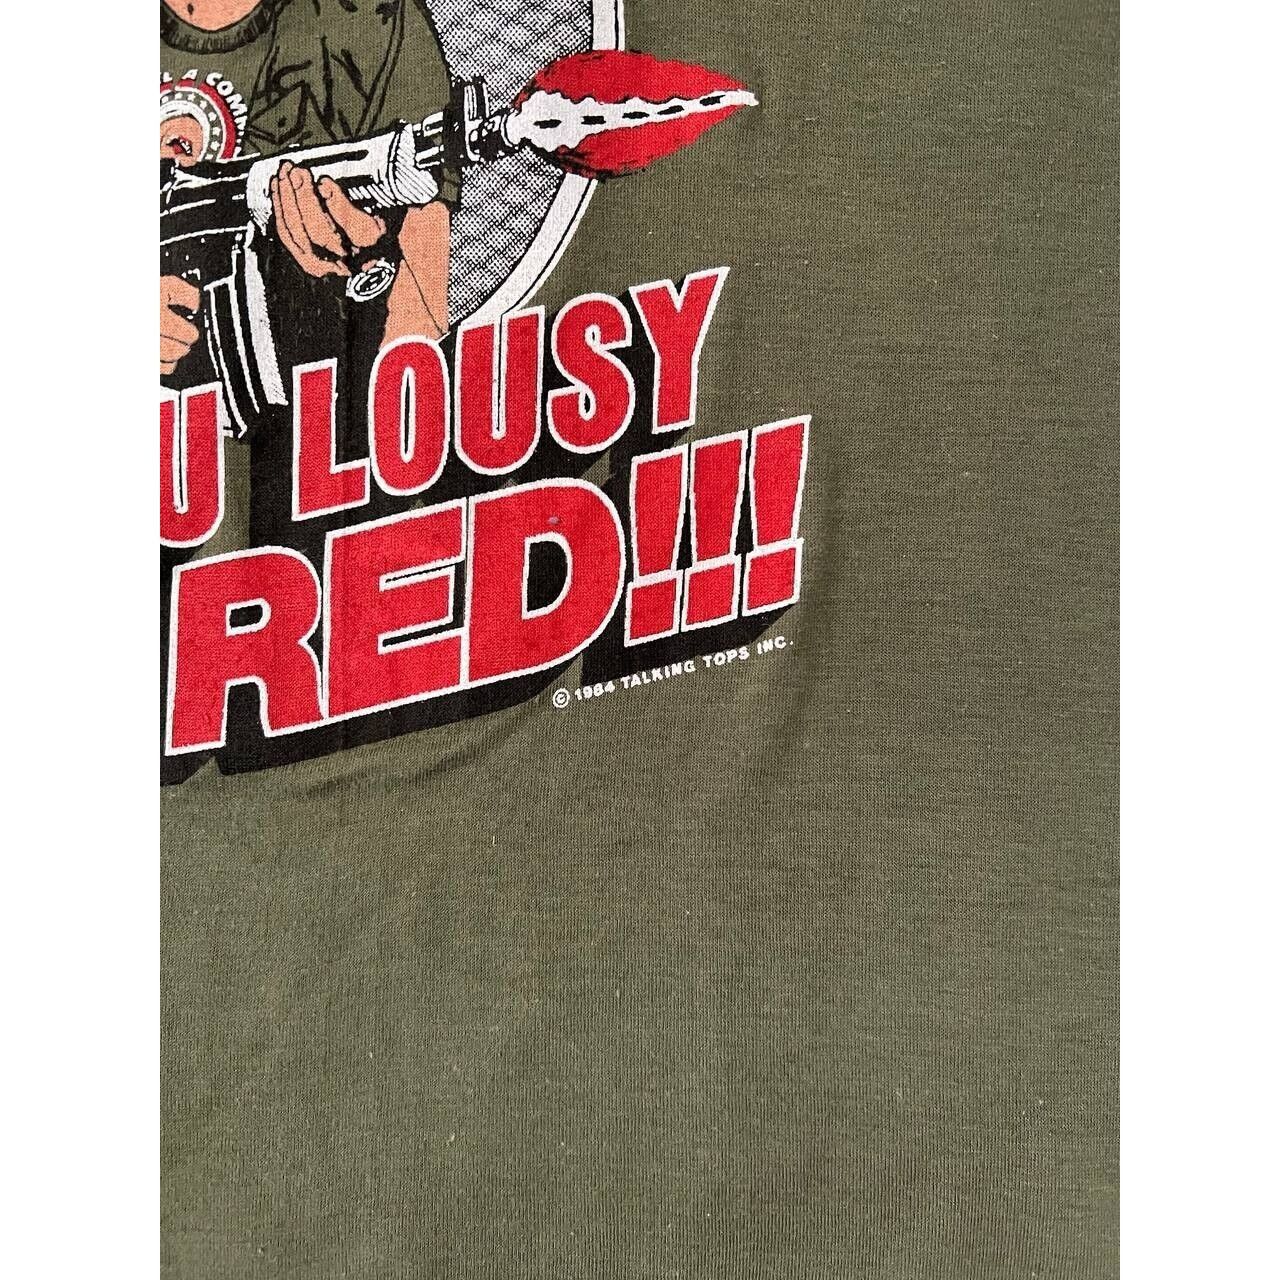 Vintage Vintage 80s 1984 USA Army "Eat lead you lousy red" Print M Size US M / EU 48-50 / 2 - 6 Preview